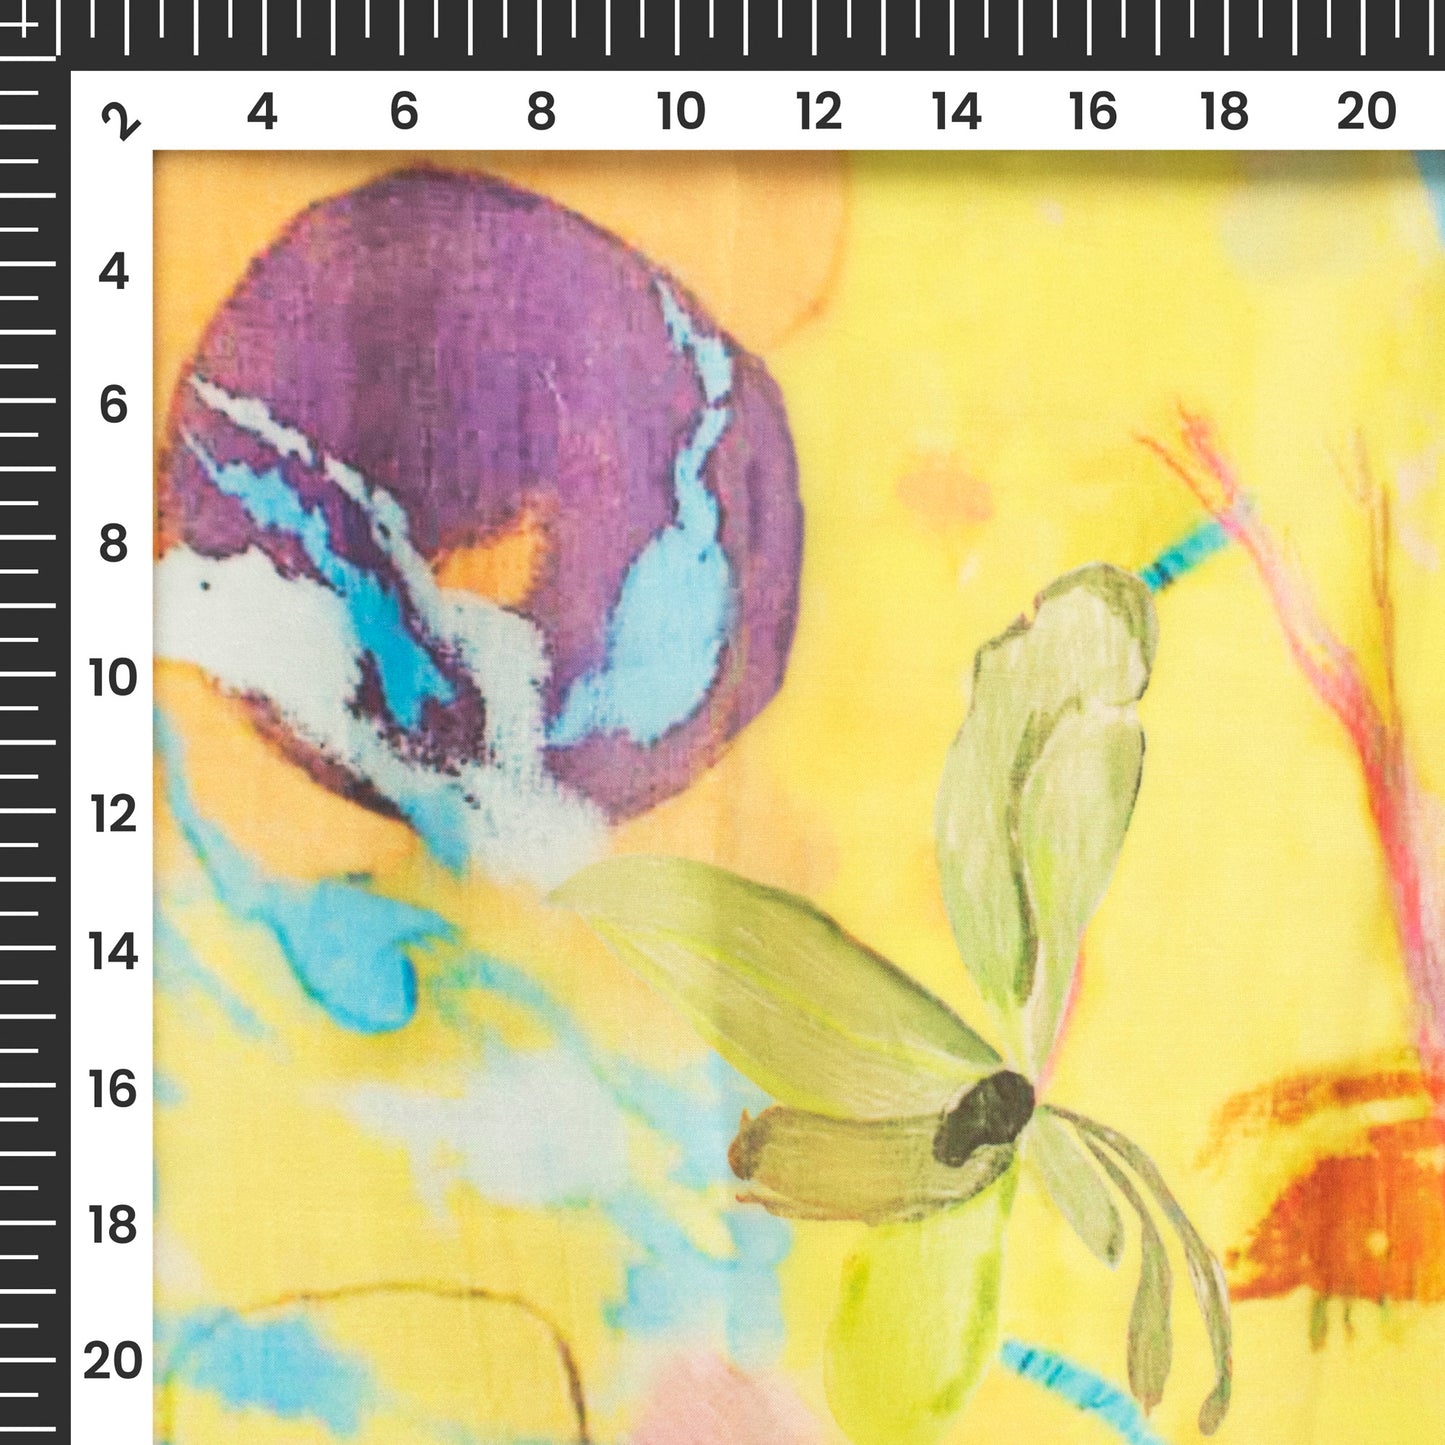 Lemon Yellow Floral Digital Print Liquid Organza Fabric